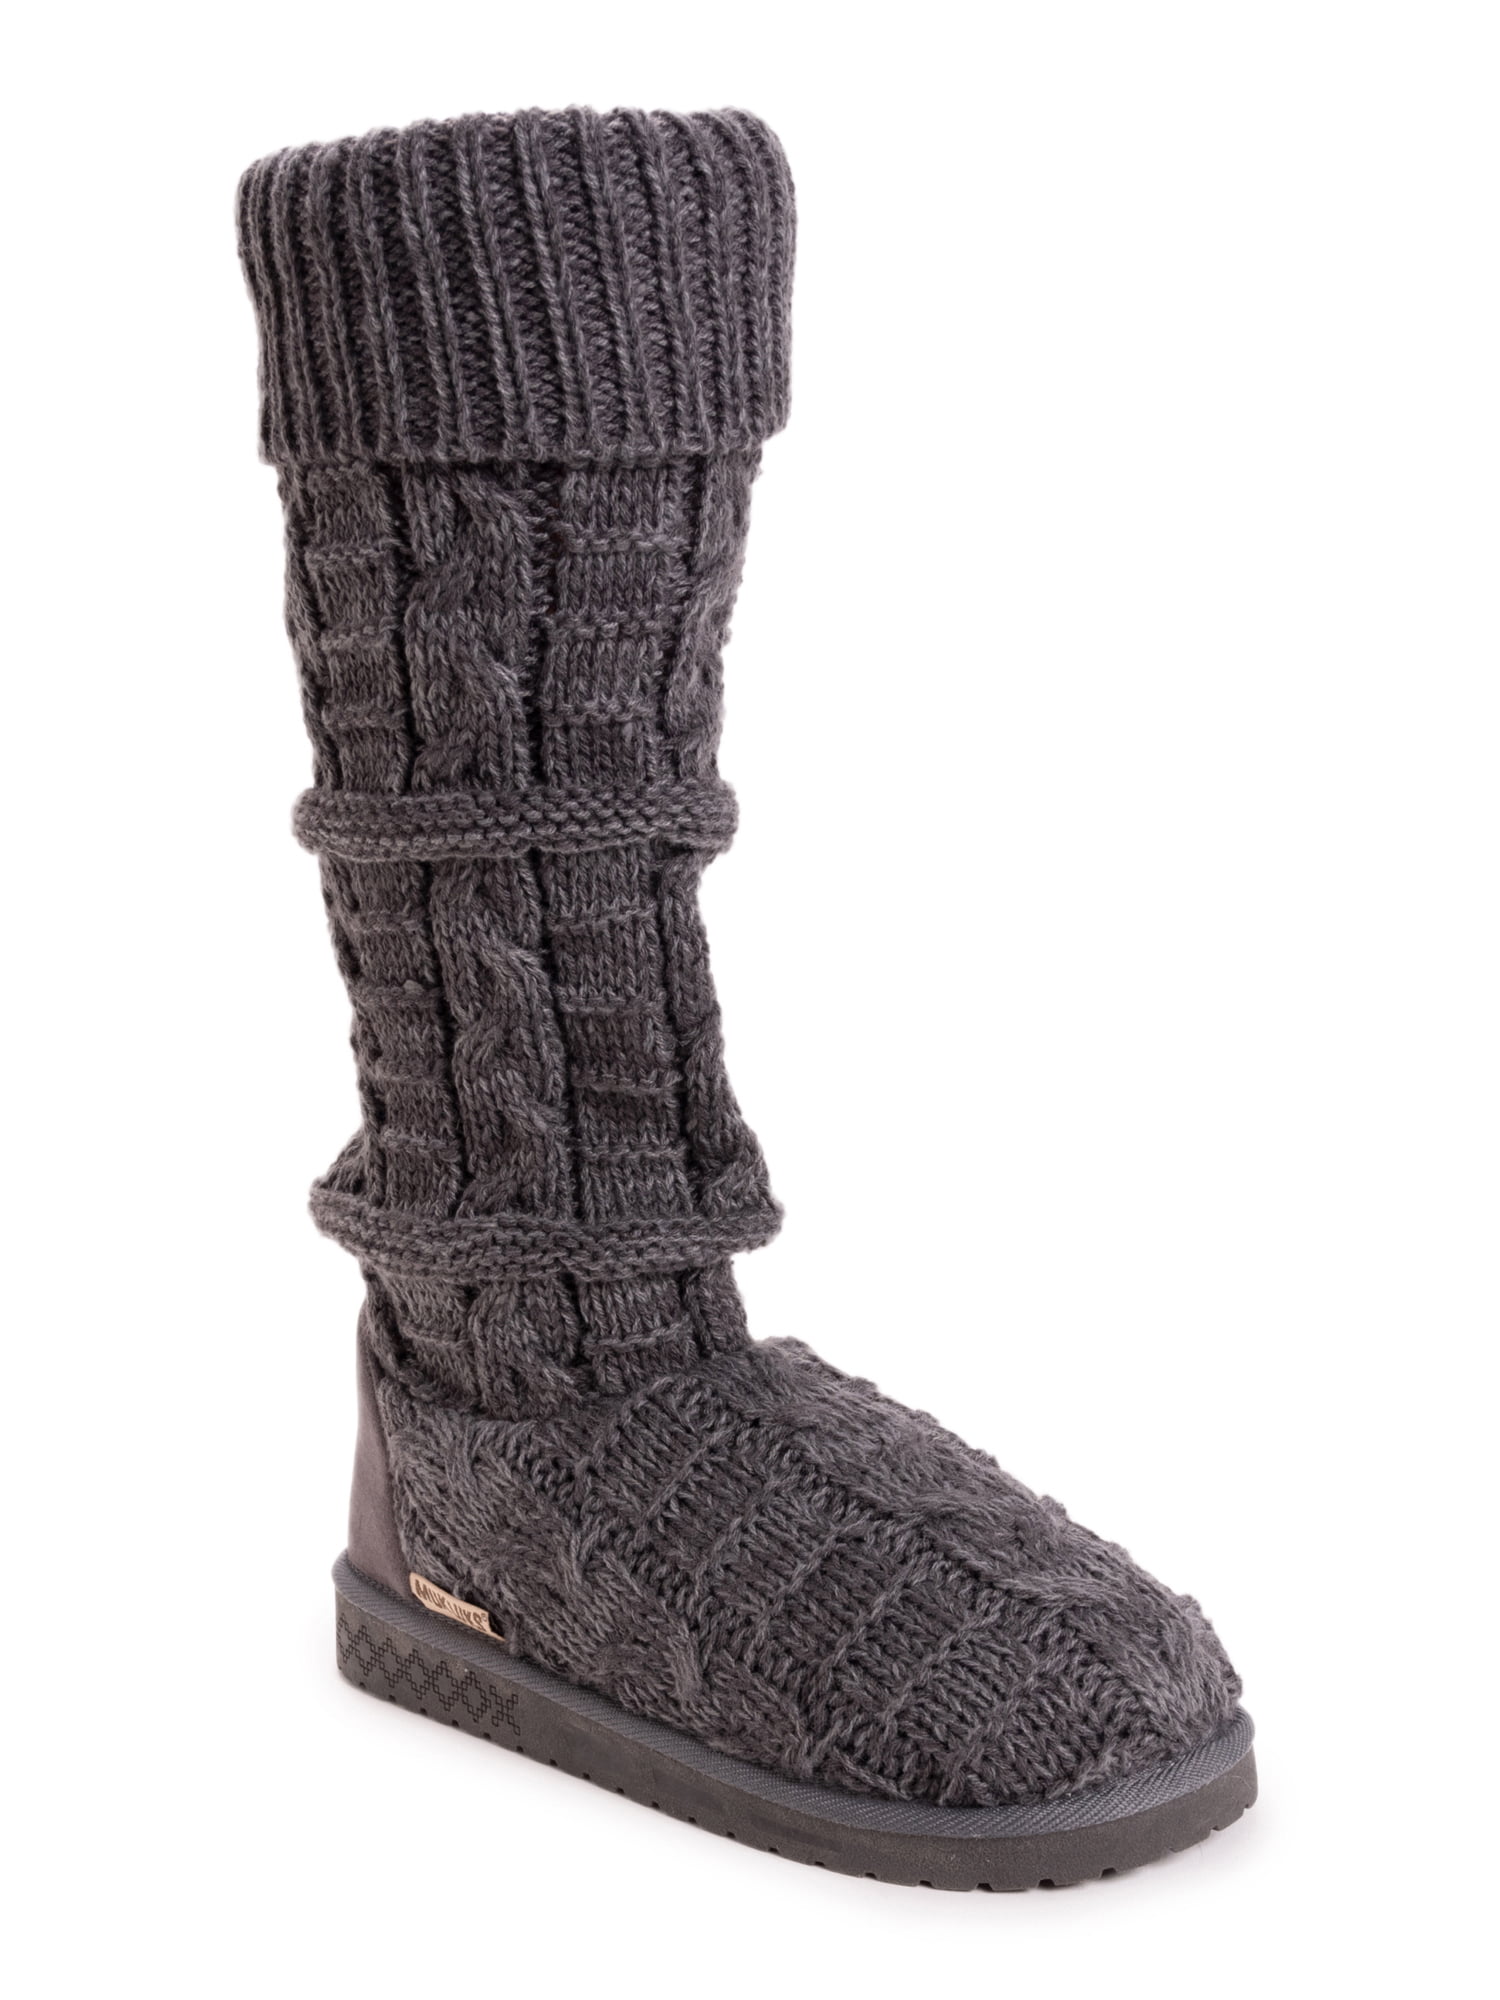 Muk Luks Shelly Marl Knit Sweater Slouch Boot (Women\'s)